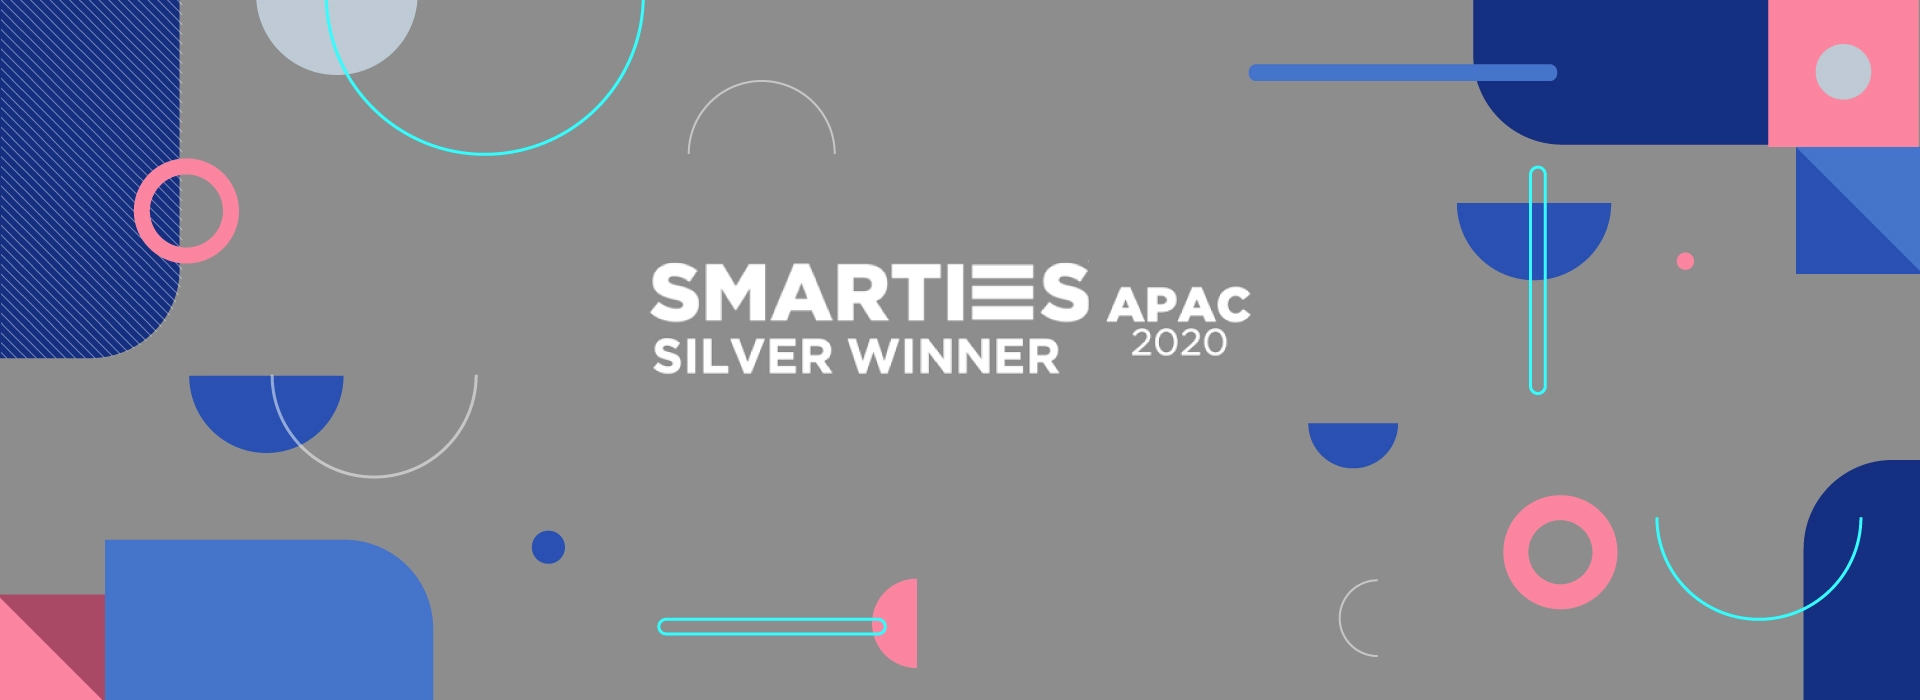 MKT_Smarties-APAC-2020_News_Banner